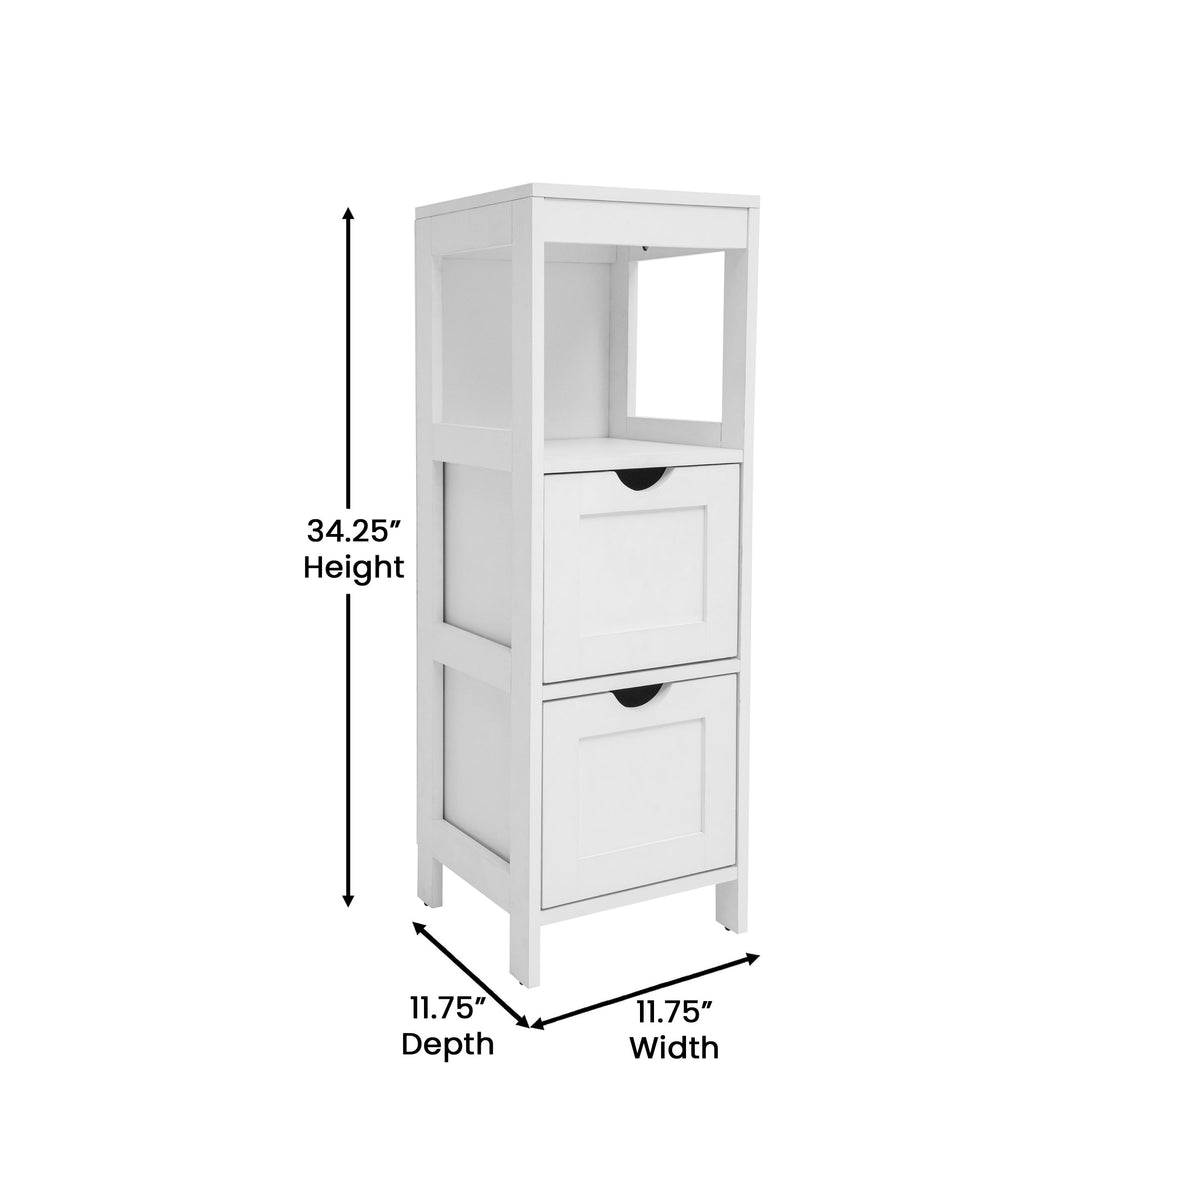 White |#| Farmhouse Bathroom Storage Organizer with 2 Drawers and Open Shelf in White